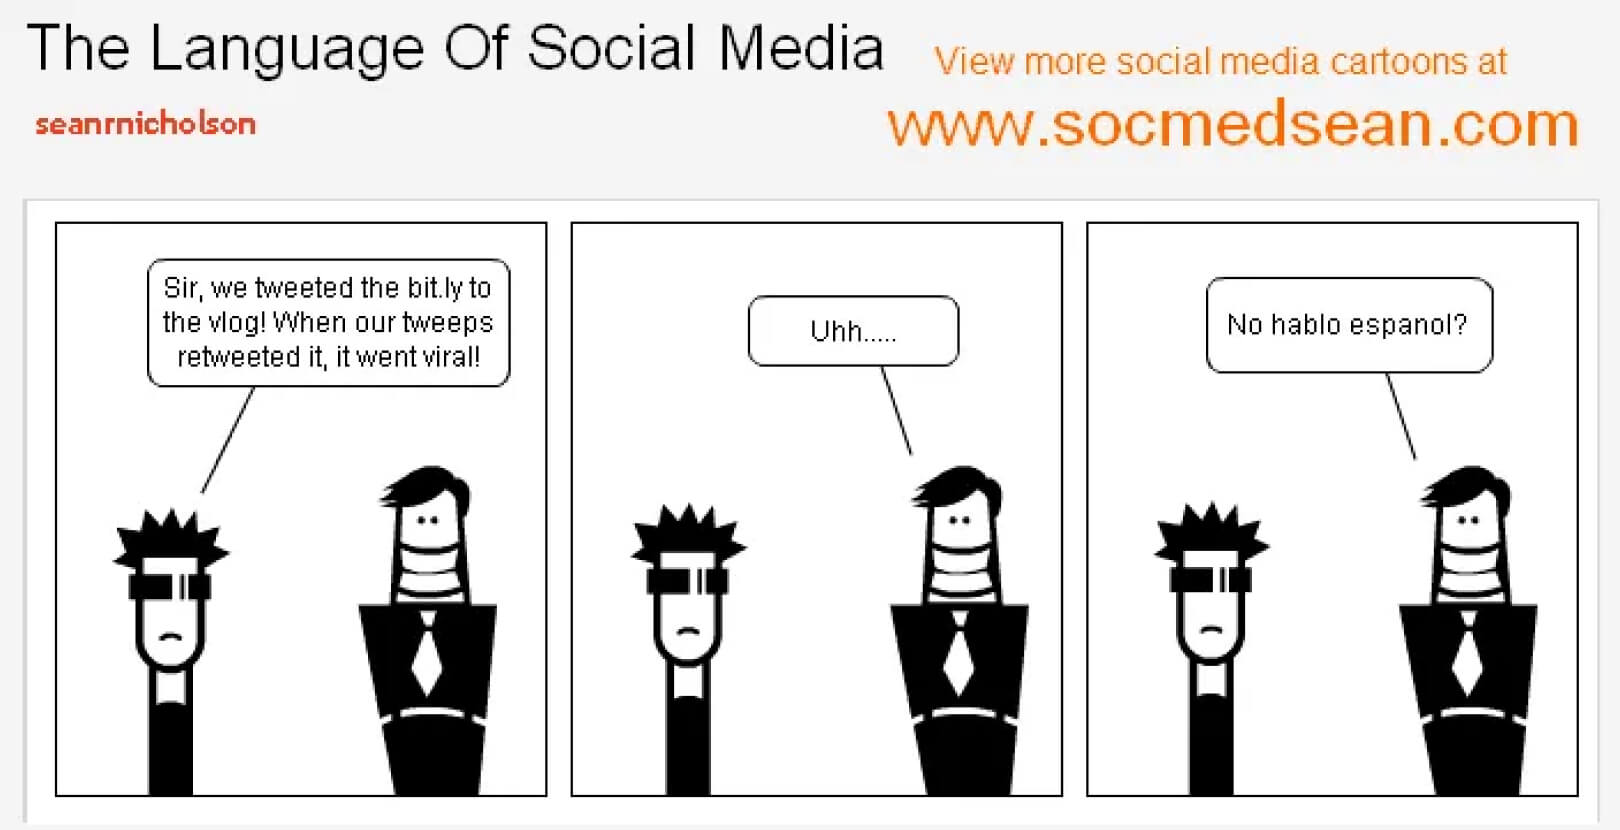 The Language of Social Media